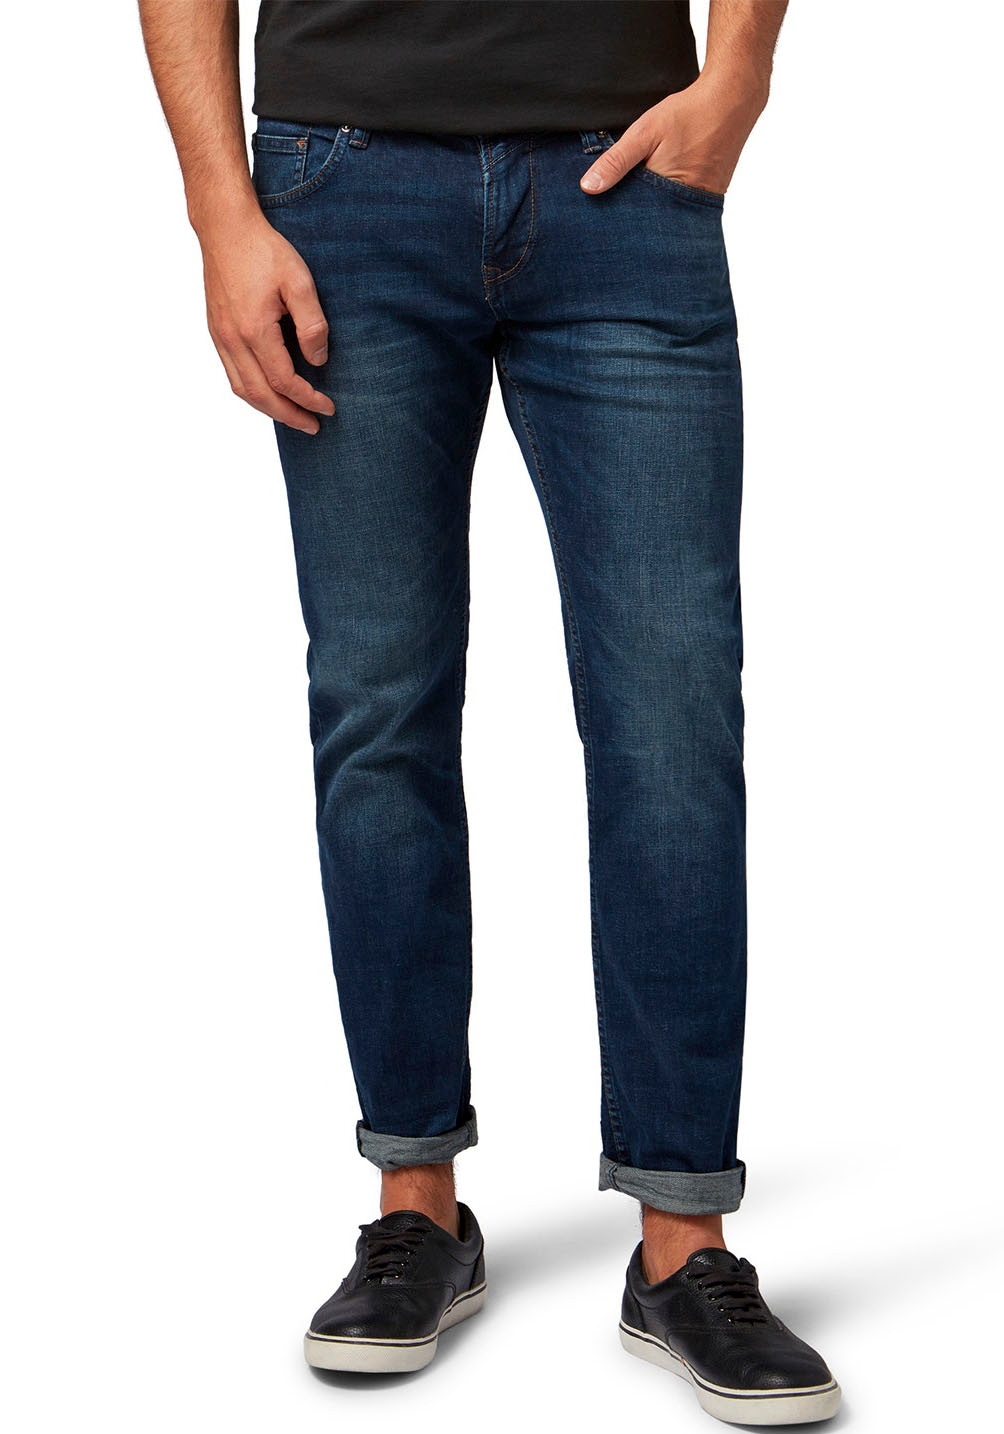 TOM TAILOR Denim 5-Pocket-Jeans »PIERS« von Tom Tailor Denim